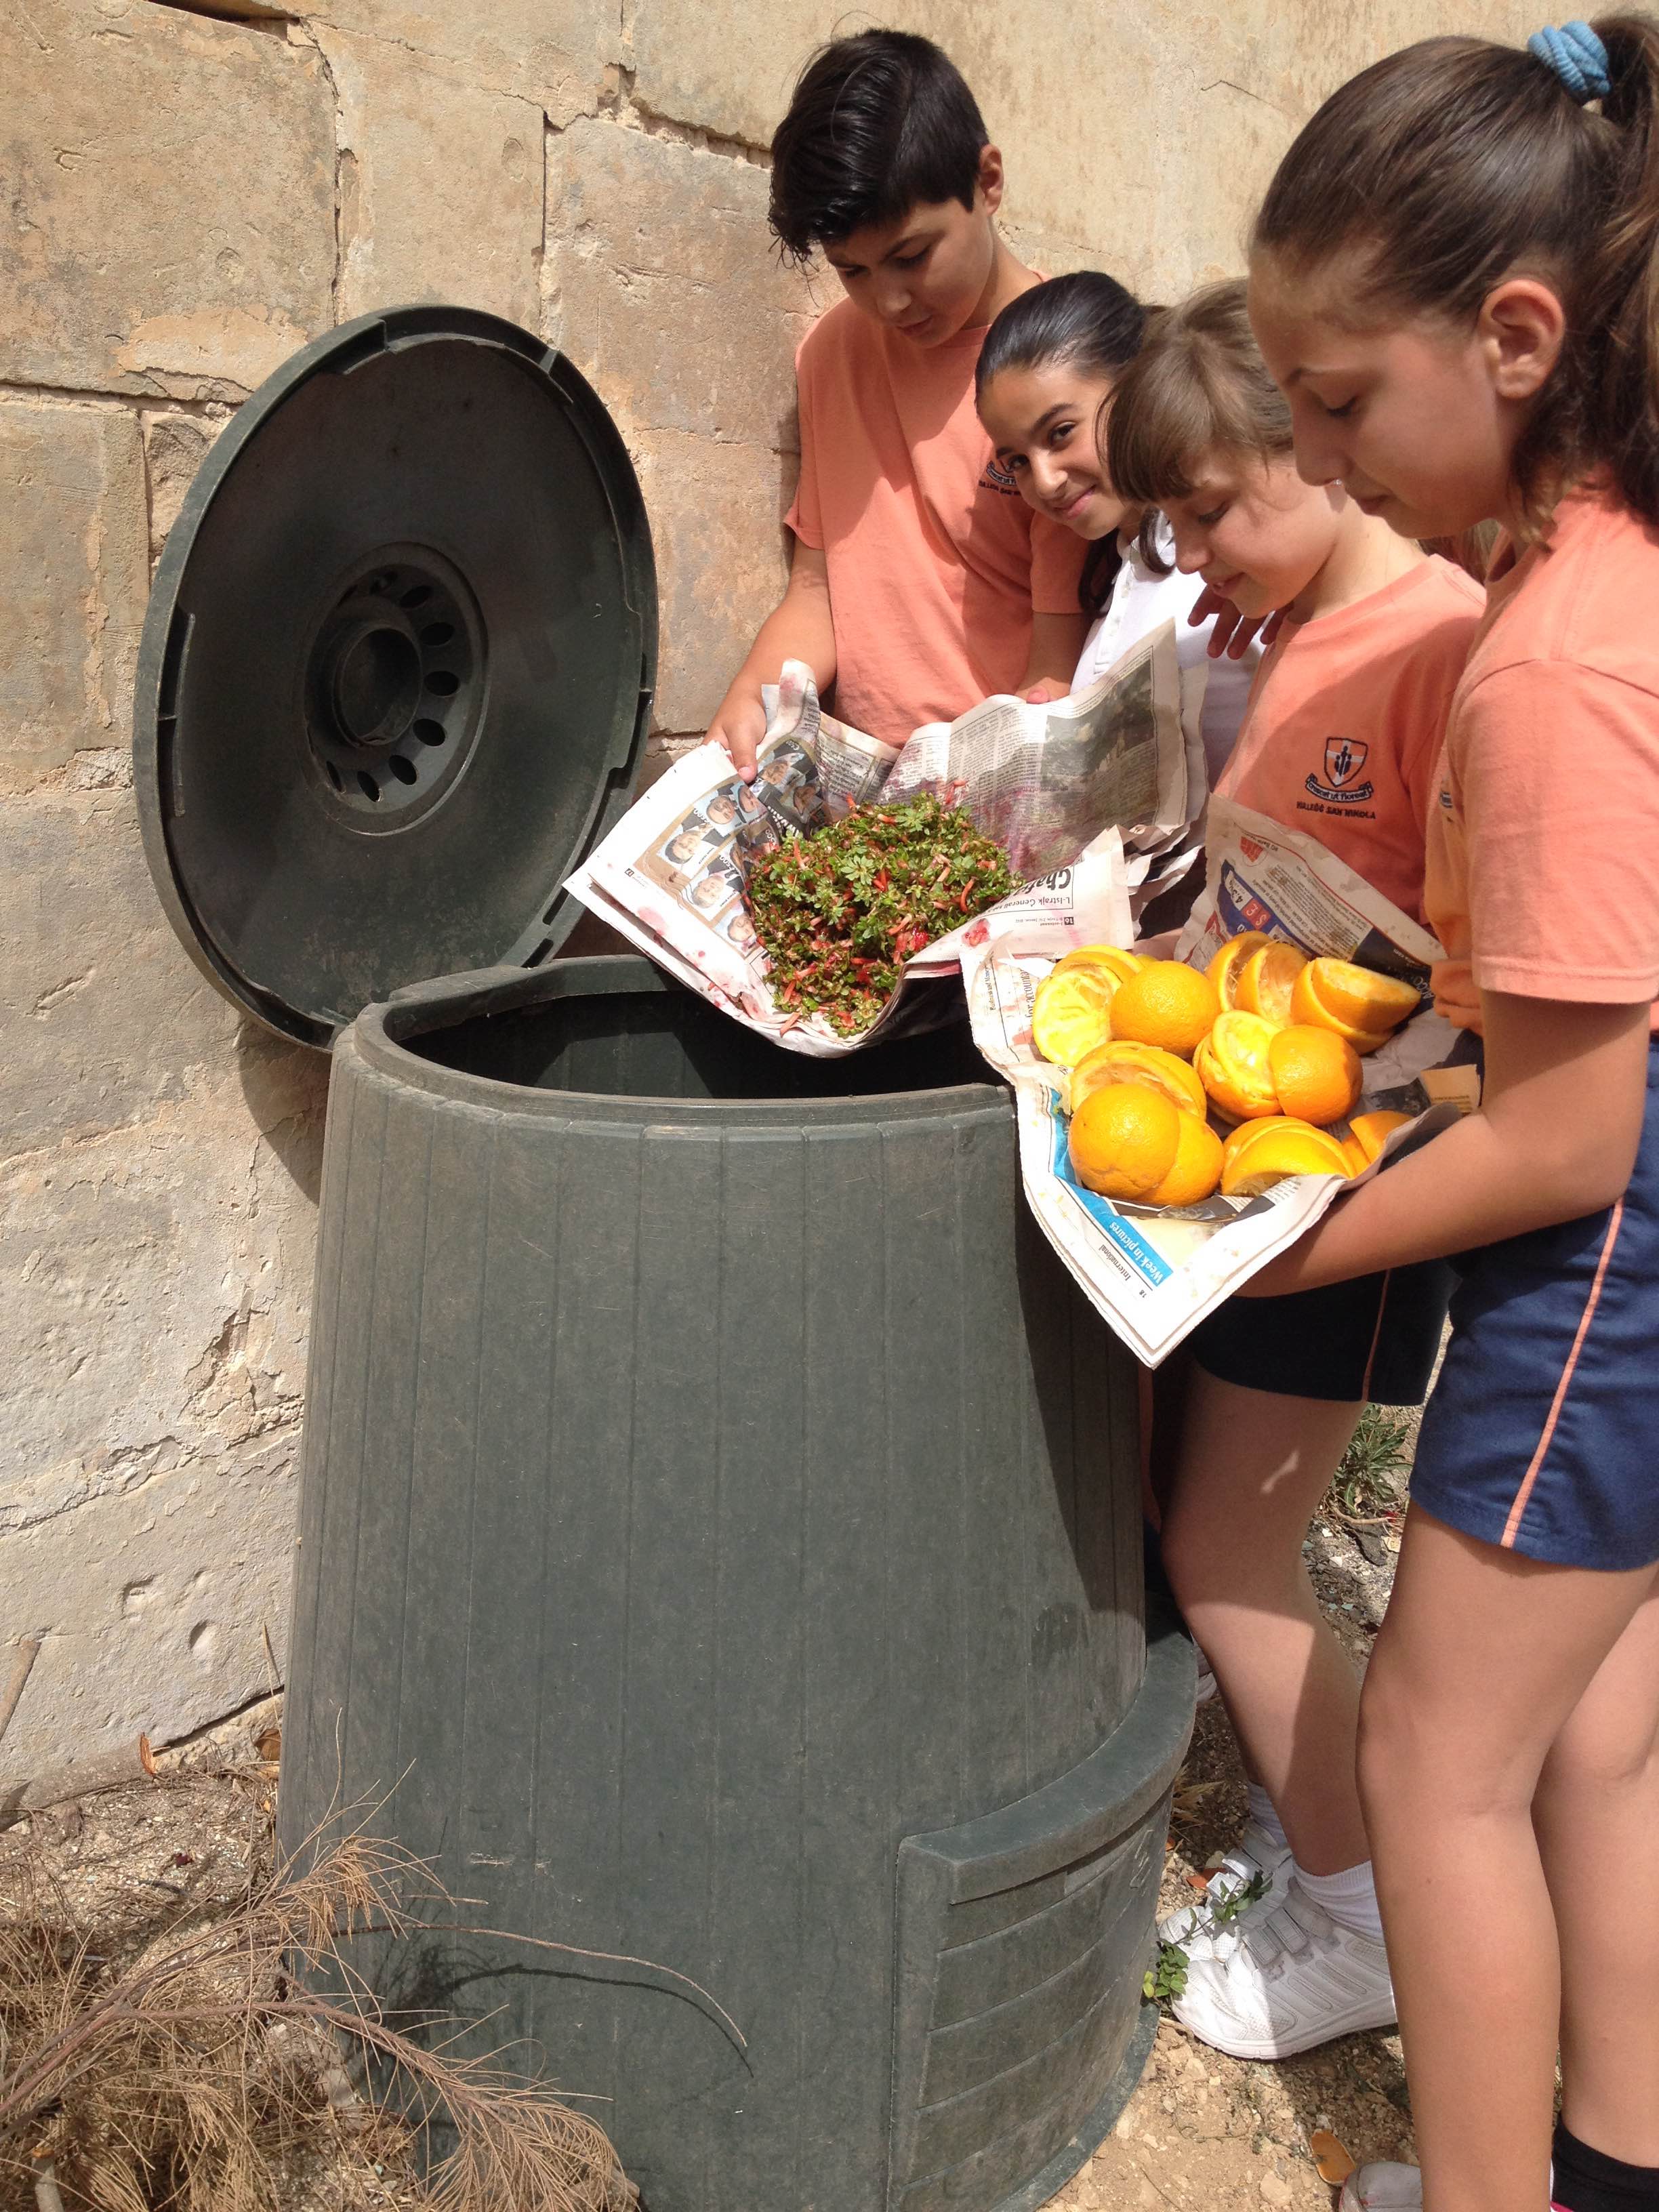  School kids cut down on food waste through composting in Malta